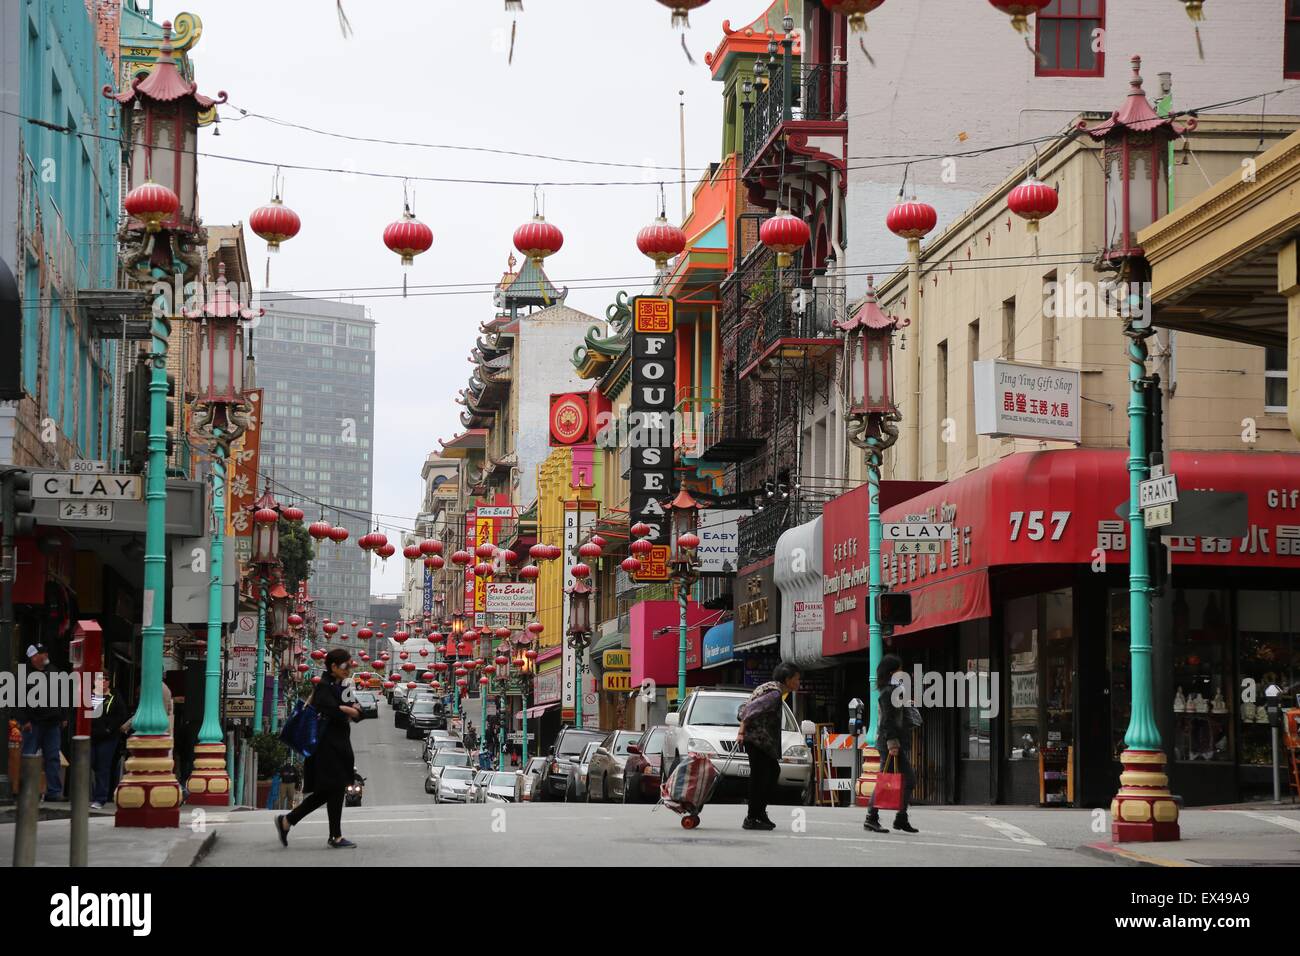 Street scene in China Town, San Francisco. Stock Photo